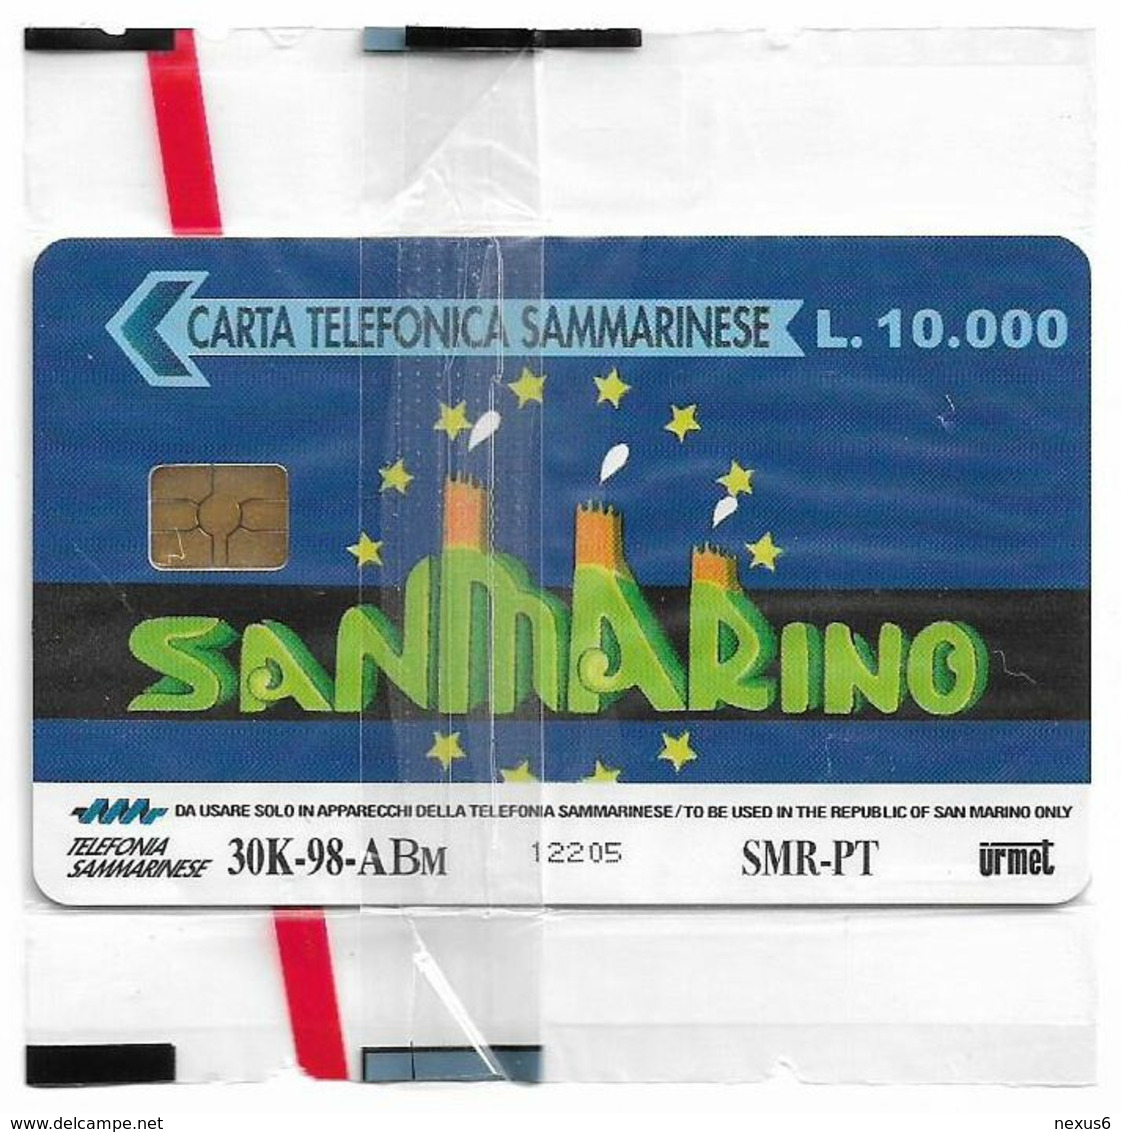 San Marino (Chip) - RSM-034 - Phonecard Expos - Europa Card Show '98 - 08.1998, 10.000L, 30.000ex, NSB - Saint-Marin